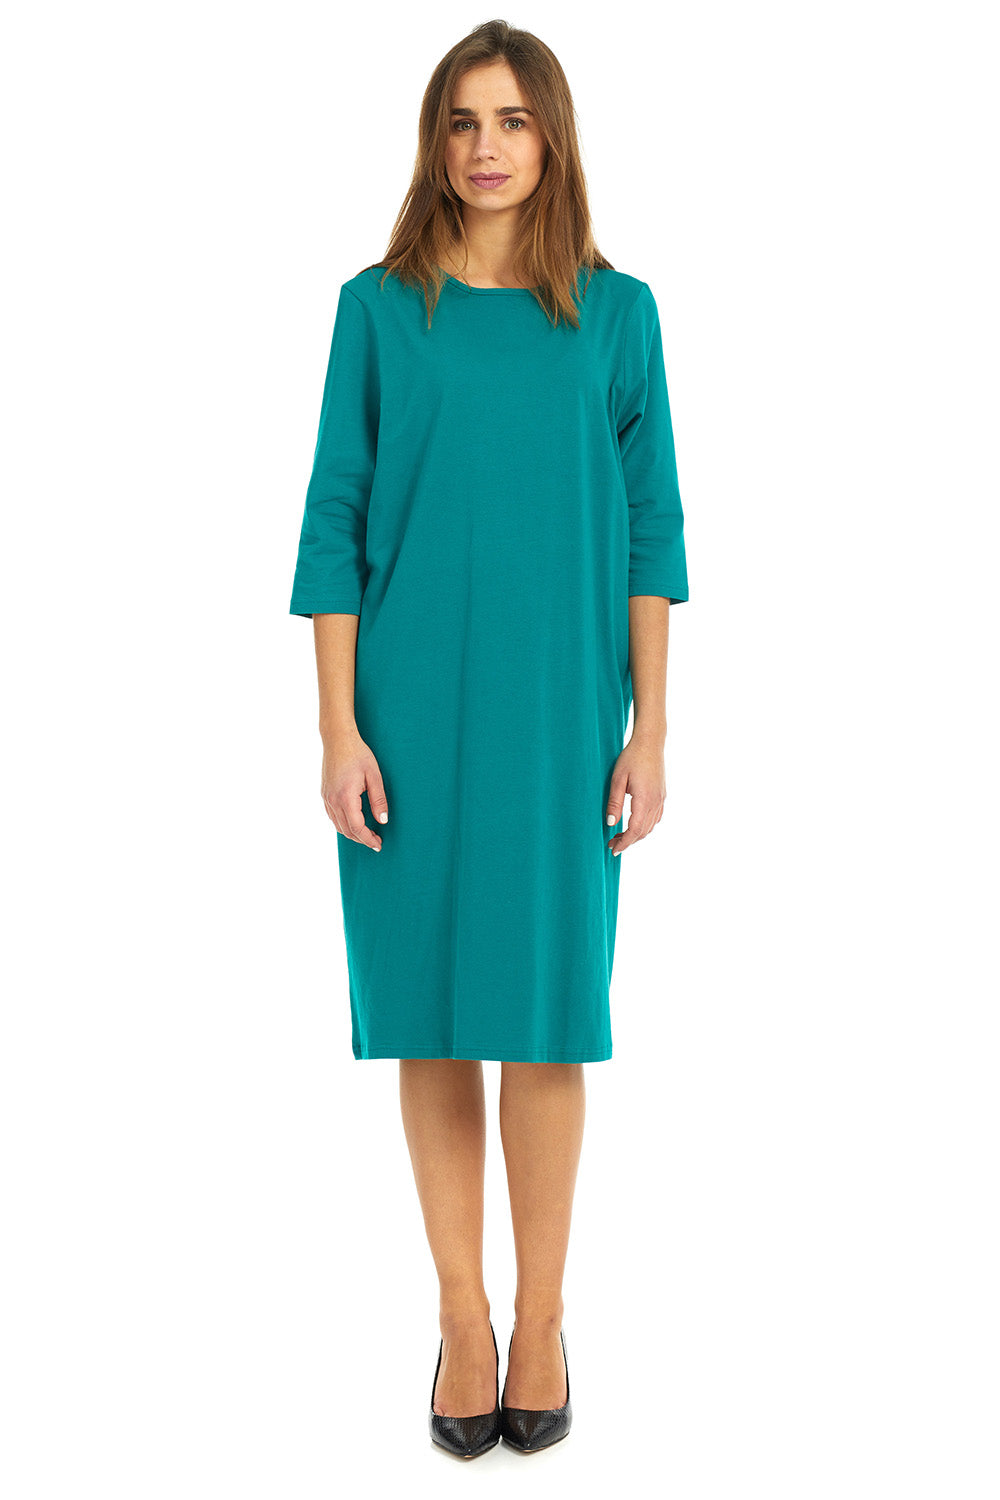 Esteez TEE Dress - Women's Cotton Spandex Casual Shift Dress - 3/4 Sleeves - TEAL